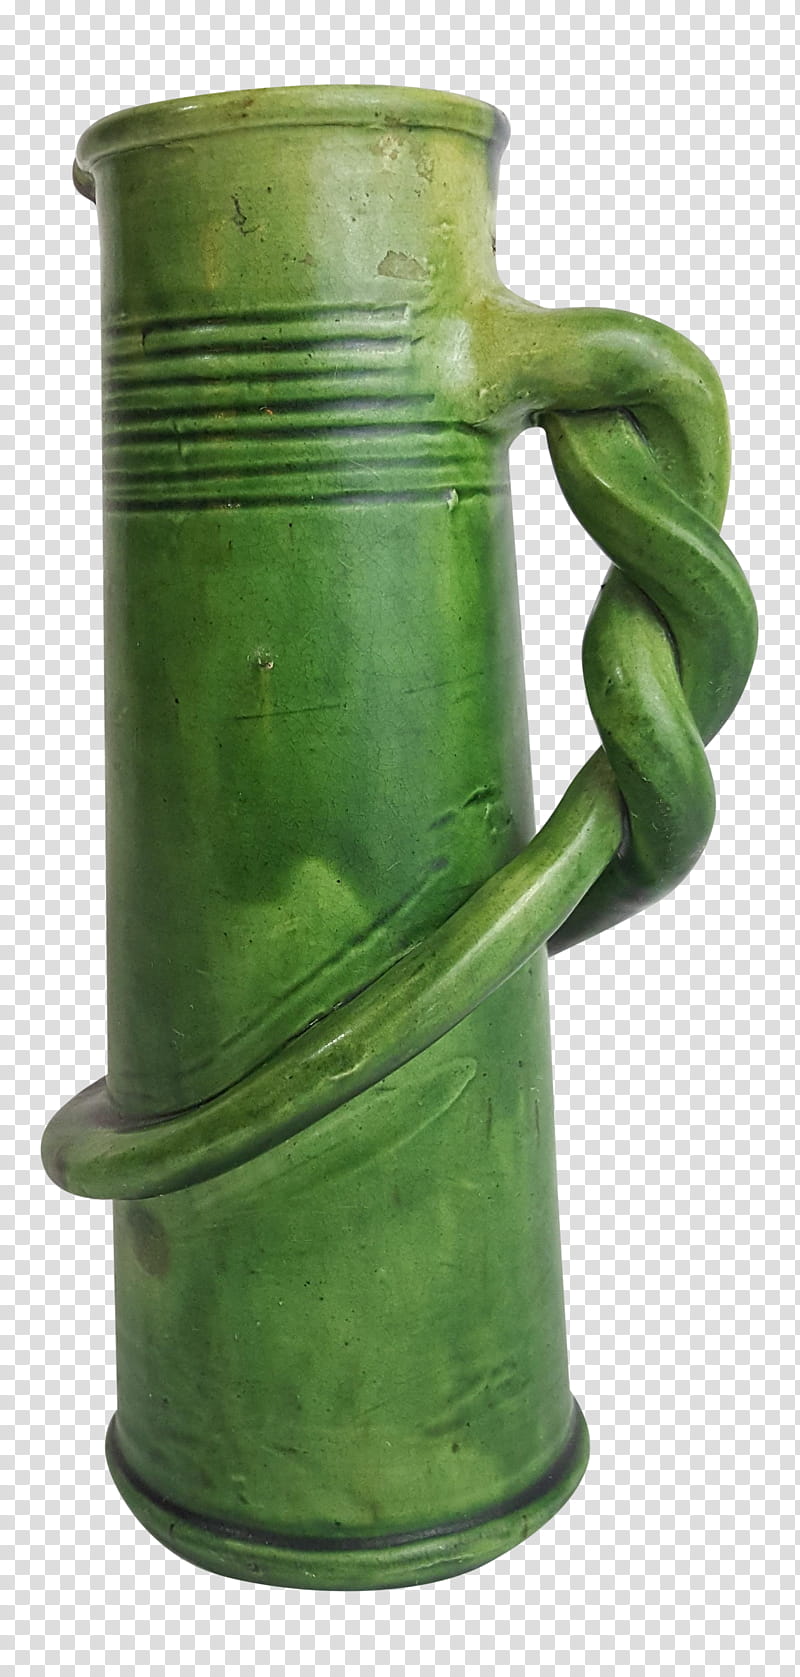 Background Green, Artifact, Mug, Jade, Plant Stem, Fashion Accessory transparent background PNG clipart